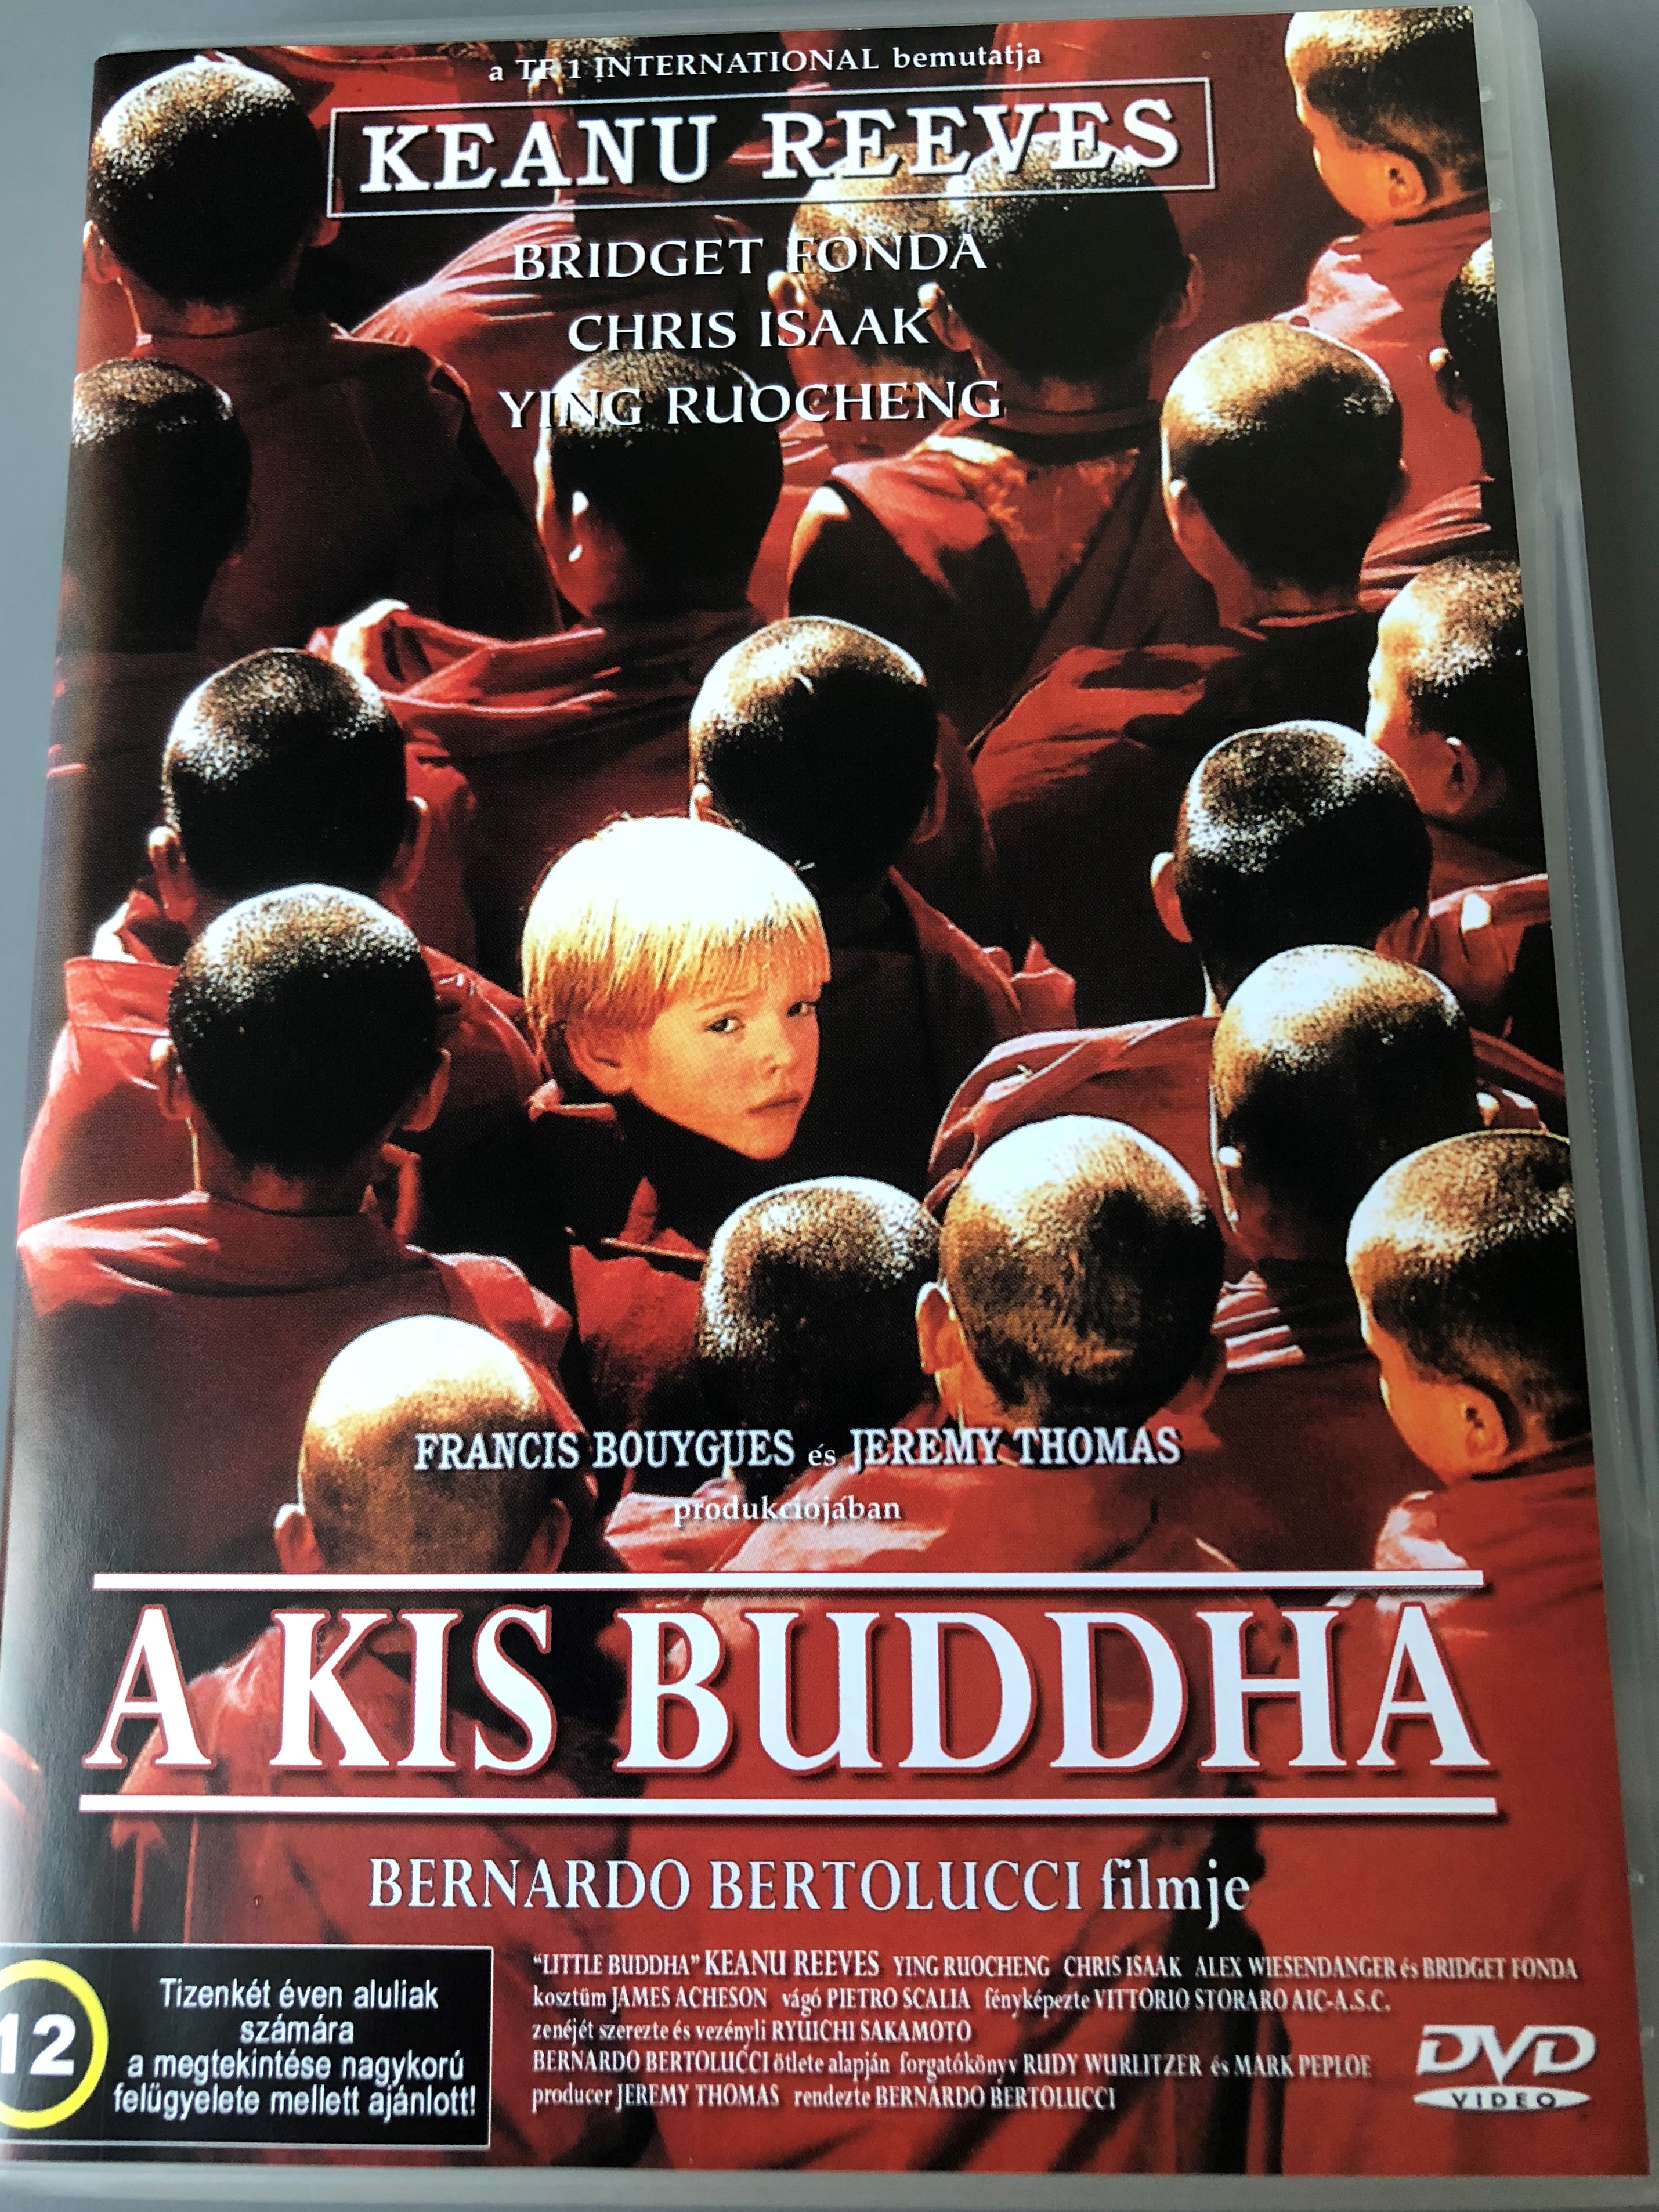 Little Buddha DVD 1993 A kis Buddha / Directed by Bernardo Bertolucci /  Starring: Keanu Reeves, Bridget Fonda, Chris Isaak, Ying Ruocheng - Bible  in My Language